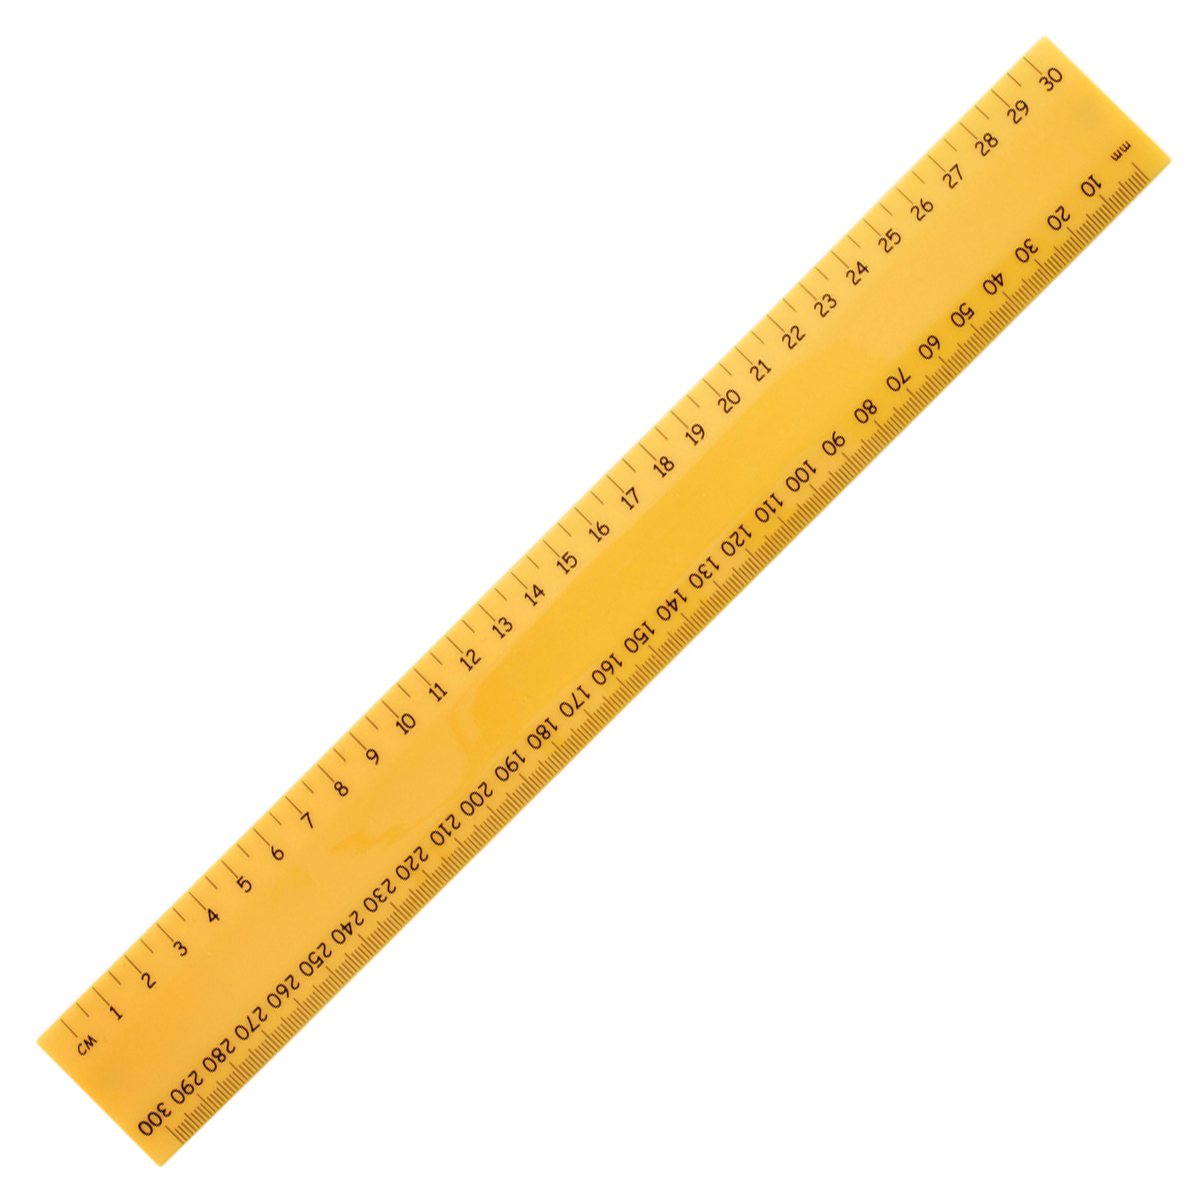 Plastic ruler clipart